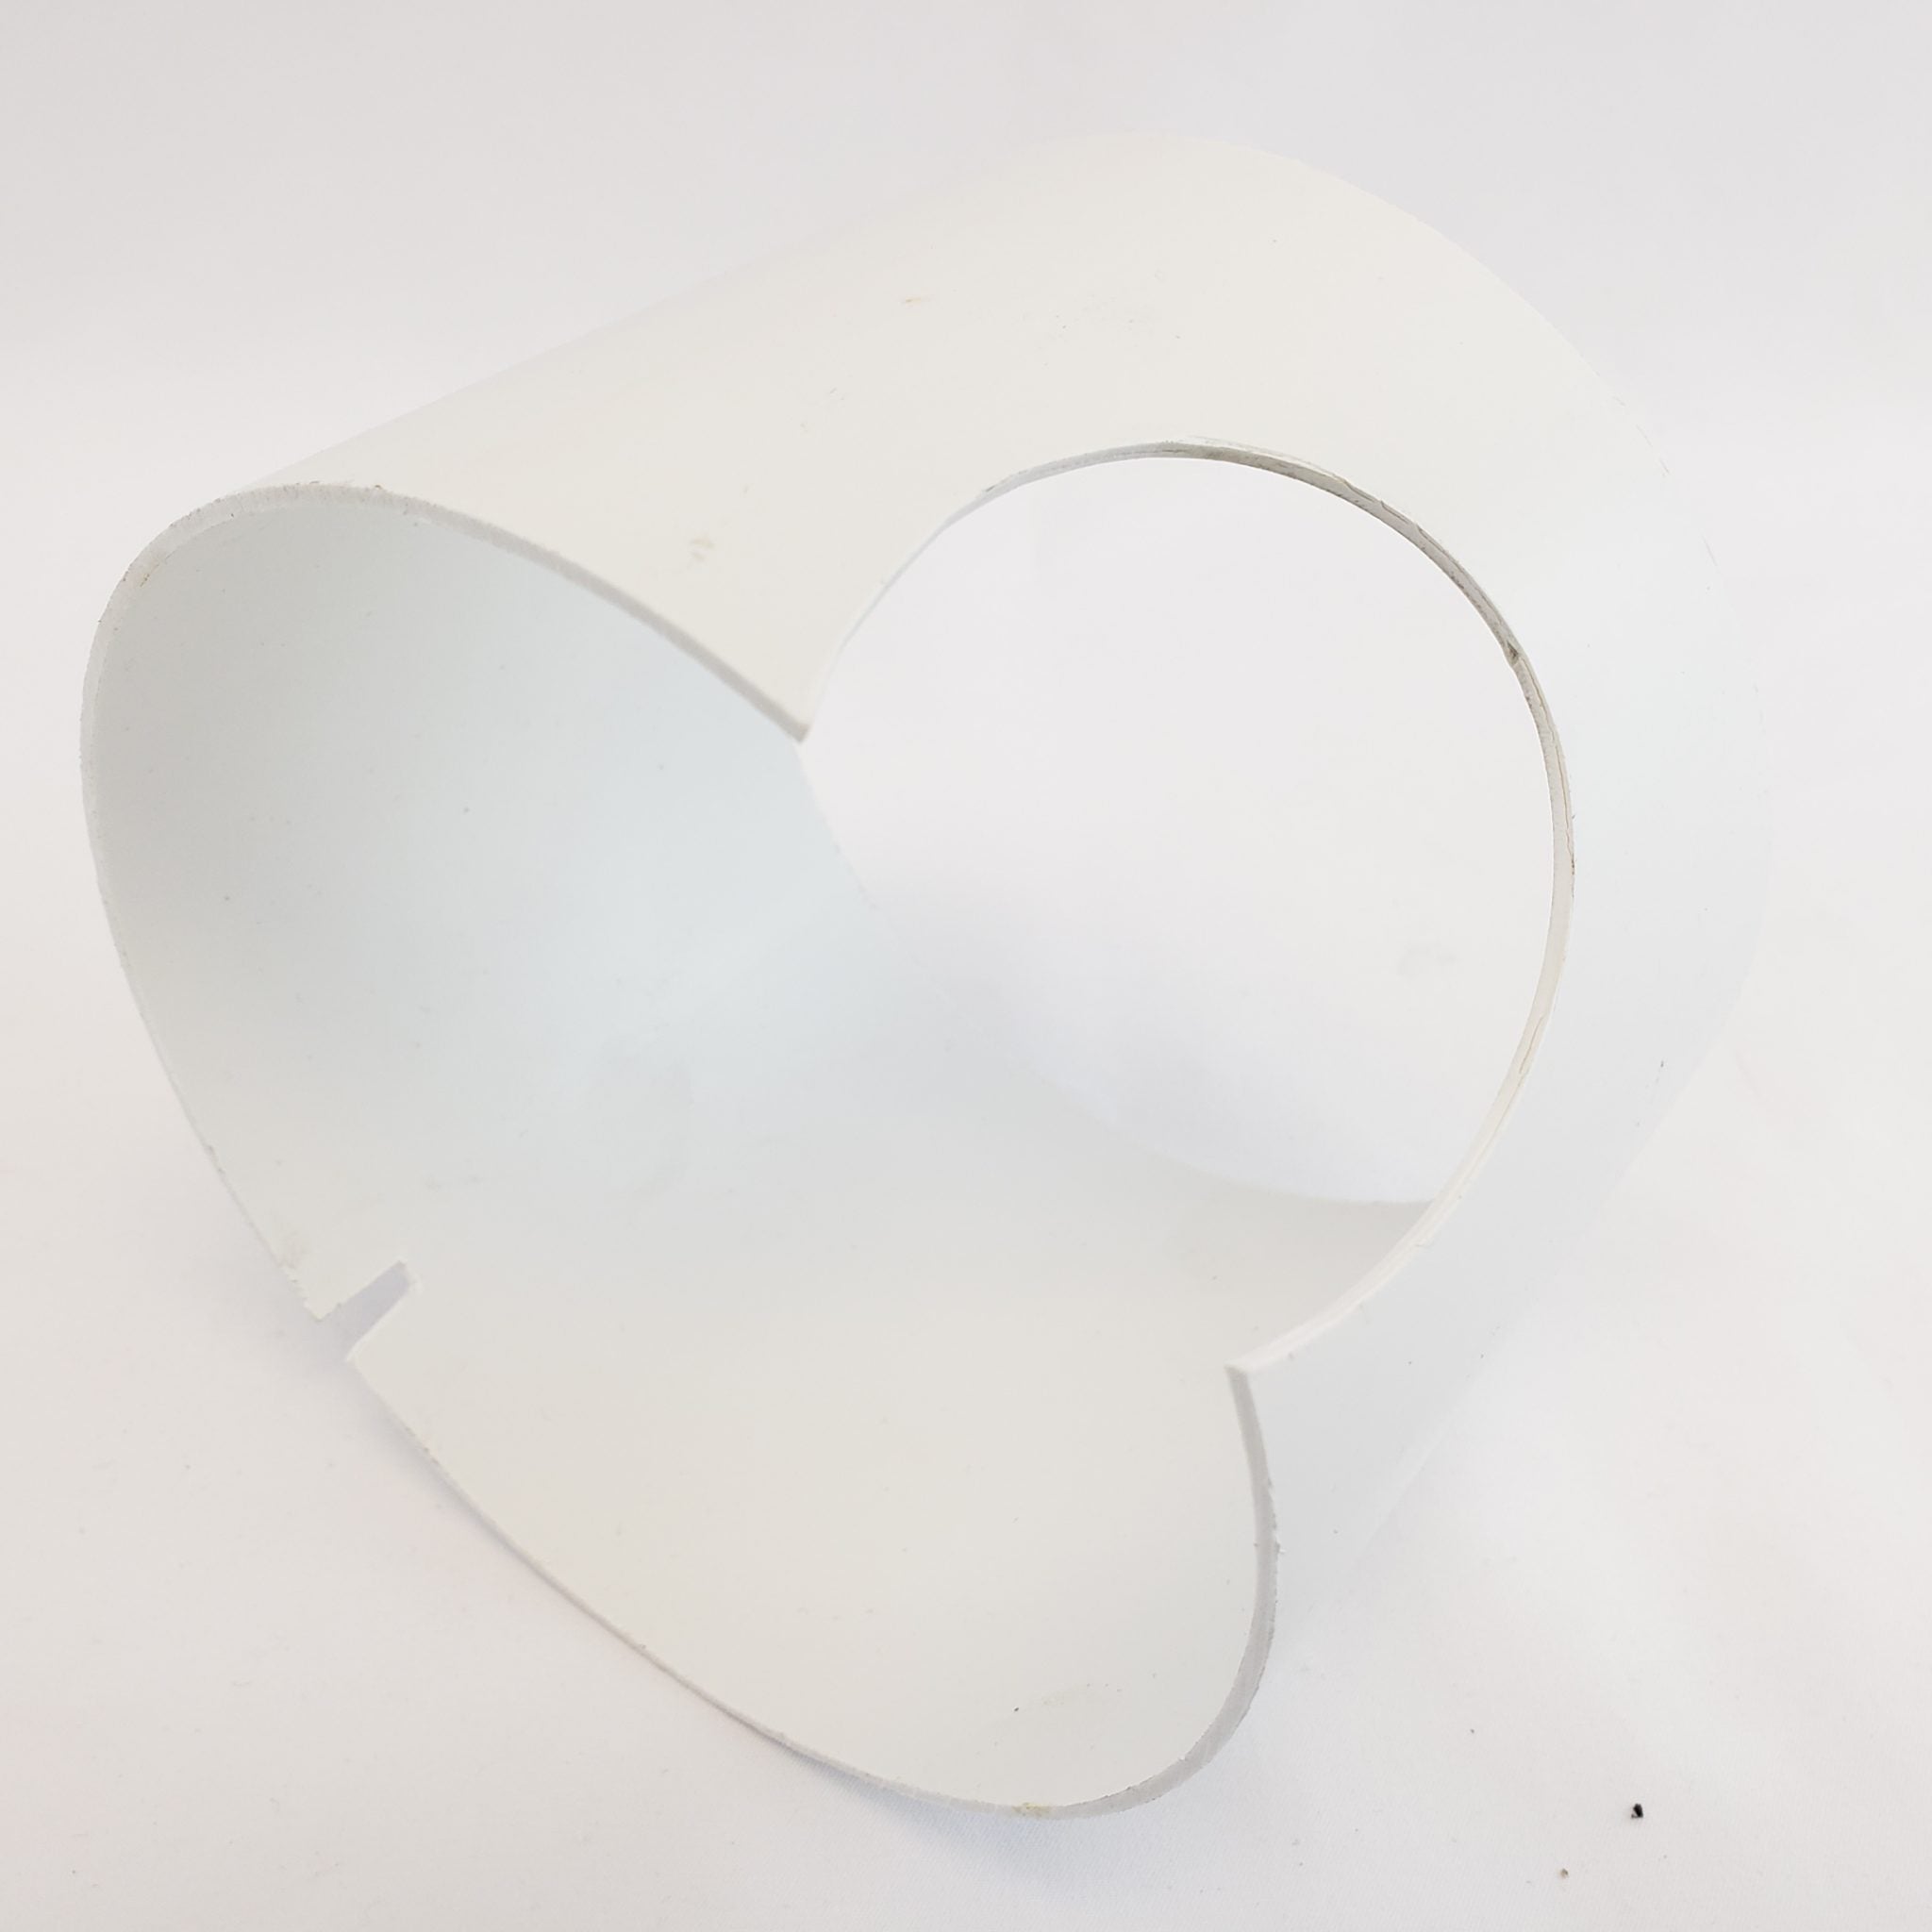 Lifegard Aquatics Housing Cap Sleeve PVC Plastic 3" Diameter Pro Max UV Sterilizers